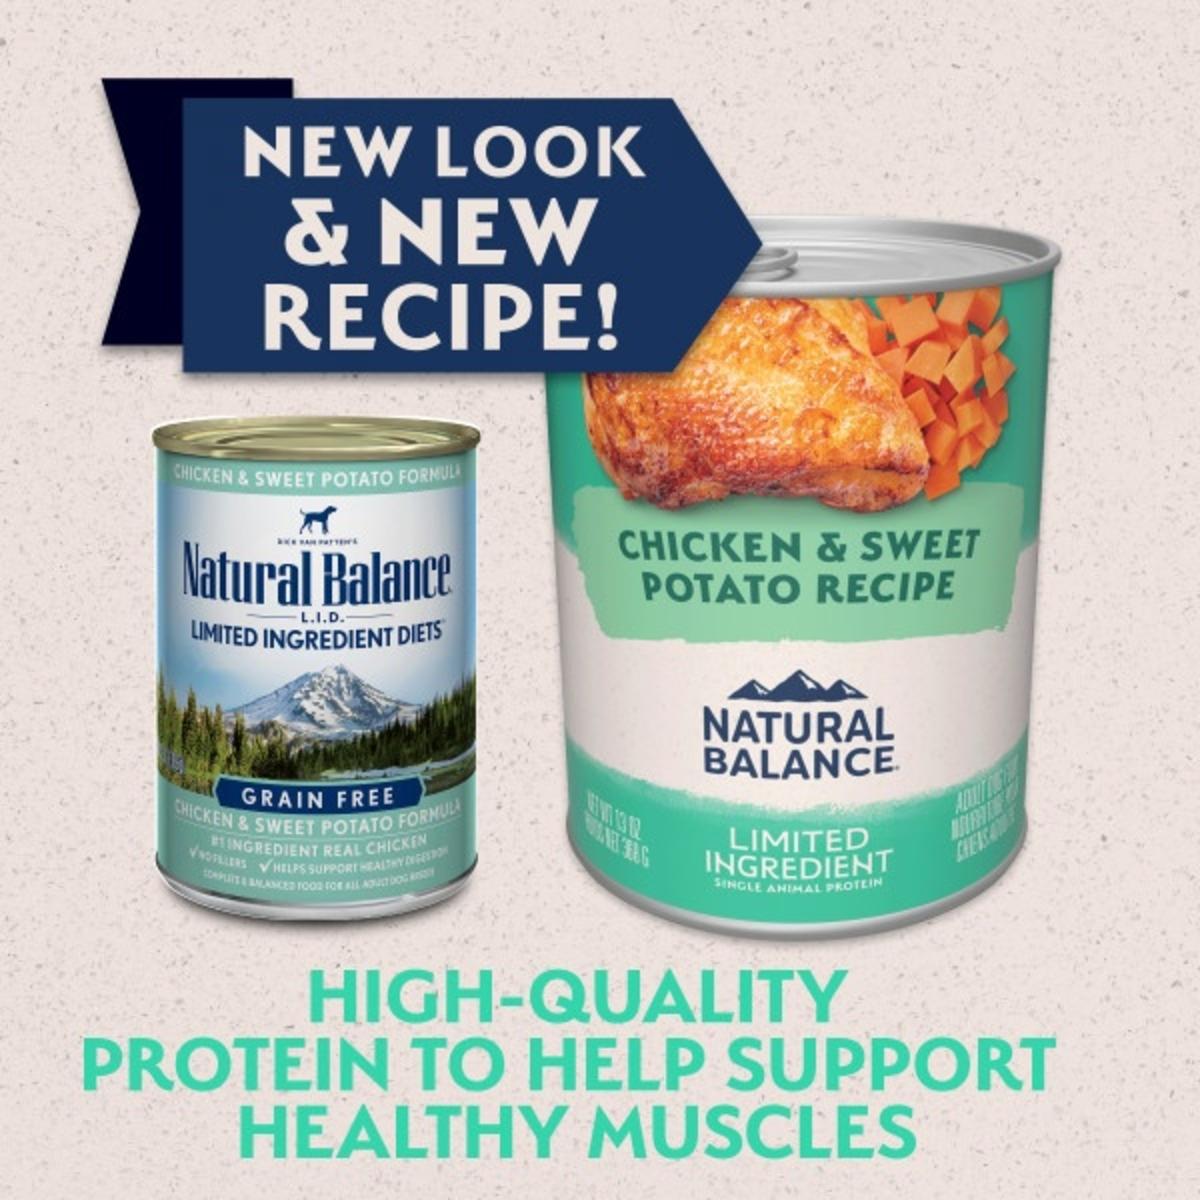 Natural Balance® Limited Ingredient Chicken & Sweet Potato Recipe New Look